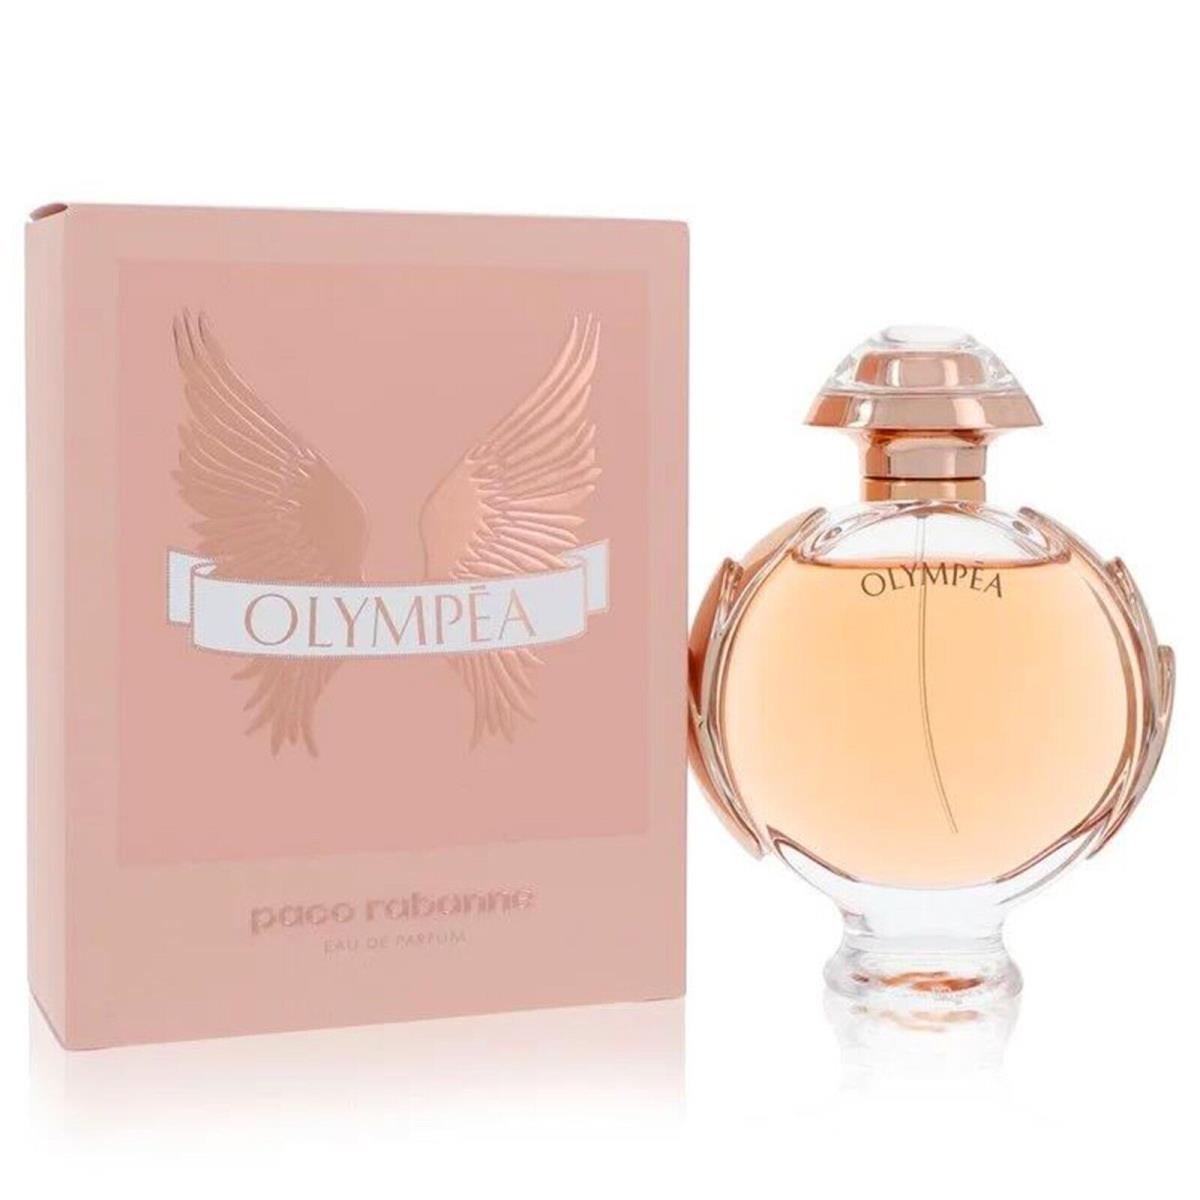 Olympea Perfume by Paco Rabanne Women Fragrance Eau De Parfum Spray 2.7 oz Edp